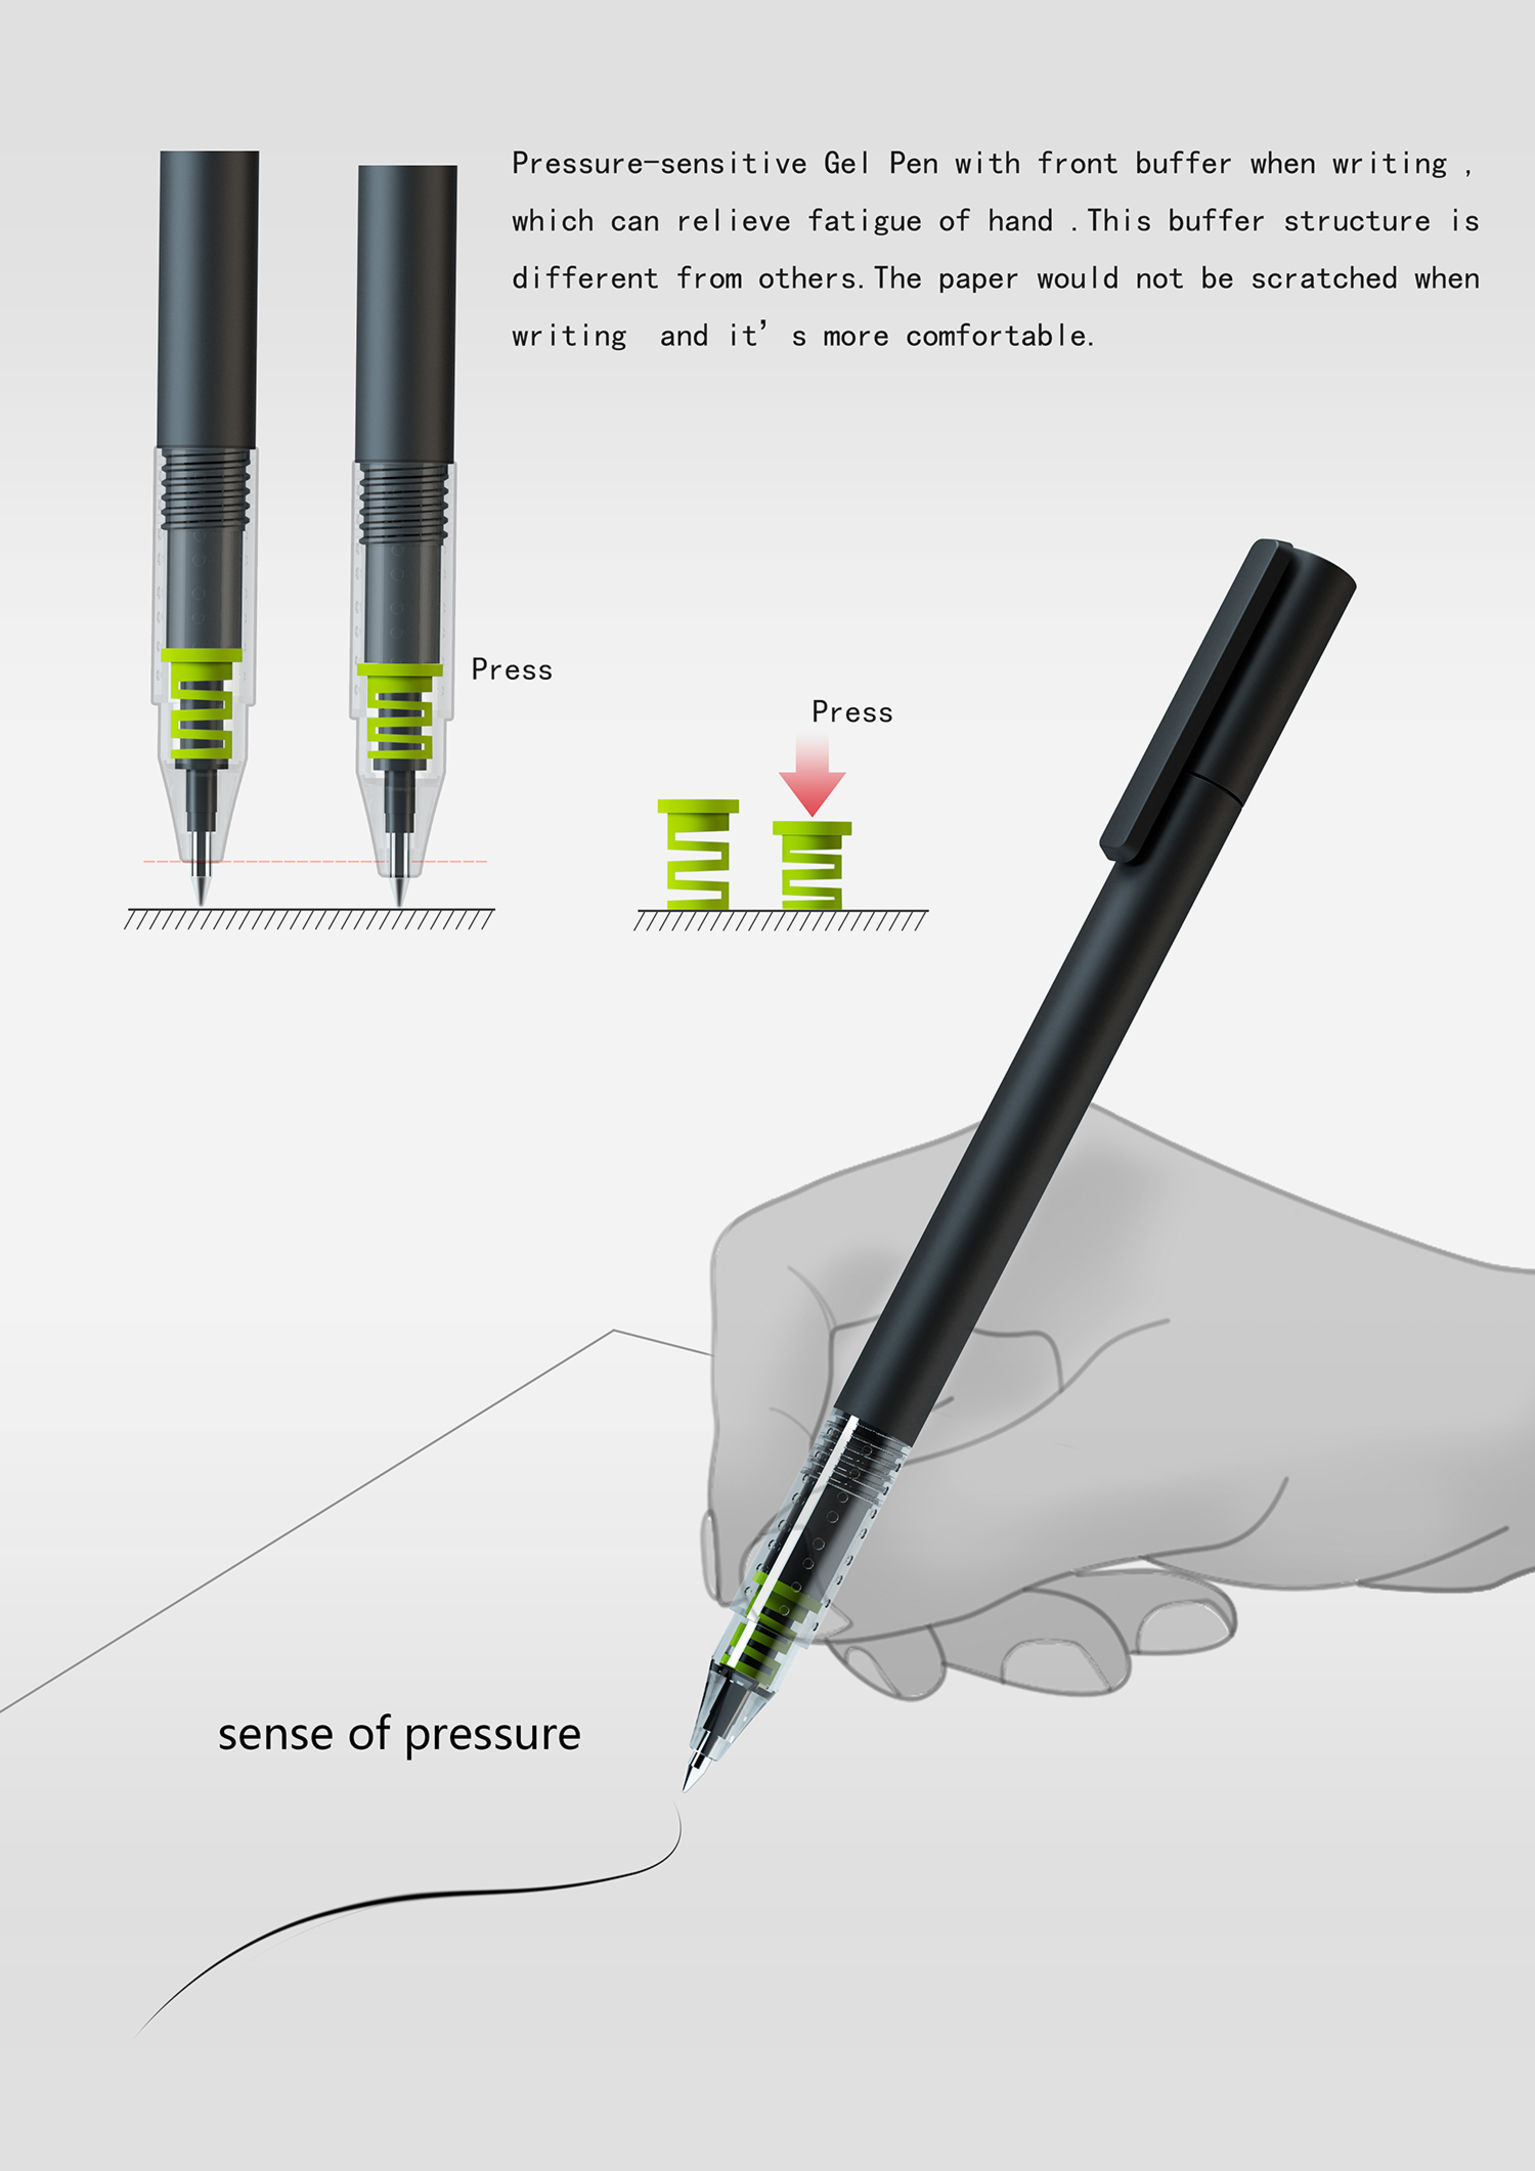 Enjoy Writing—Pressure sensitive Gel pen